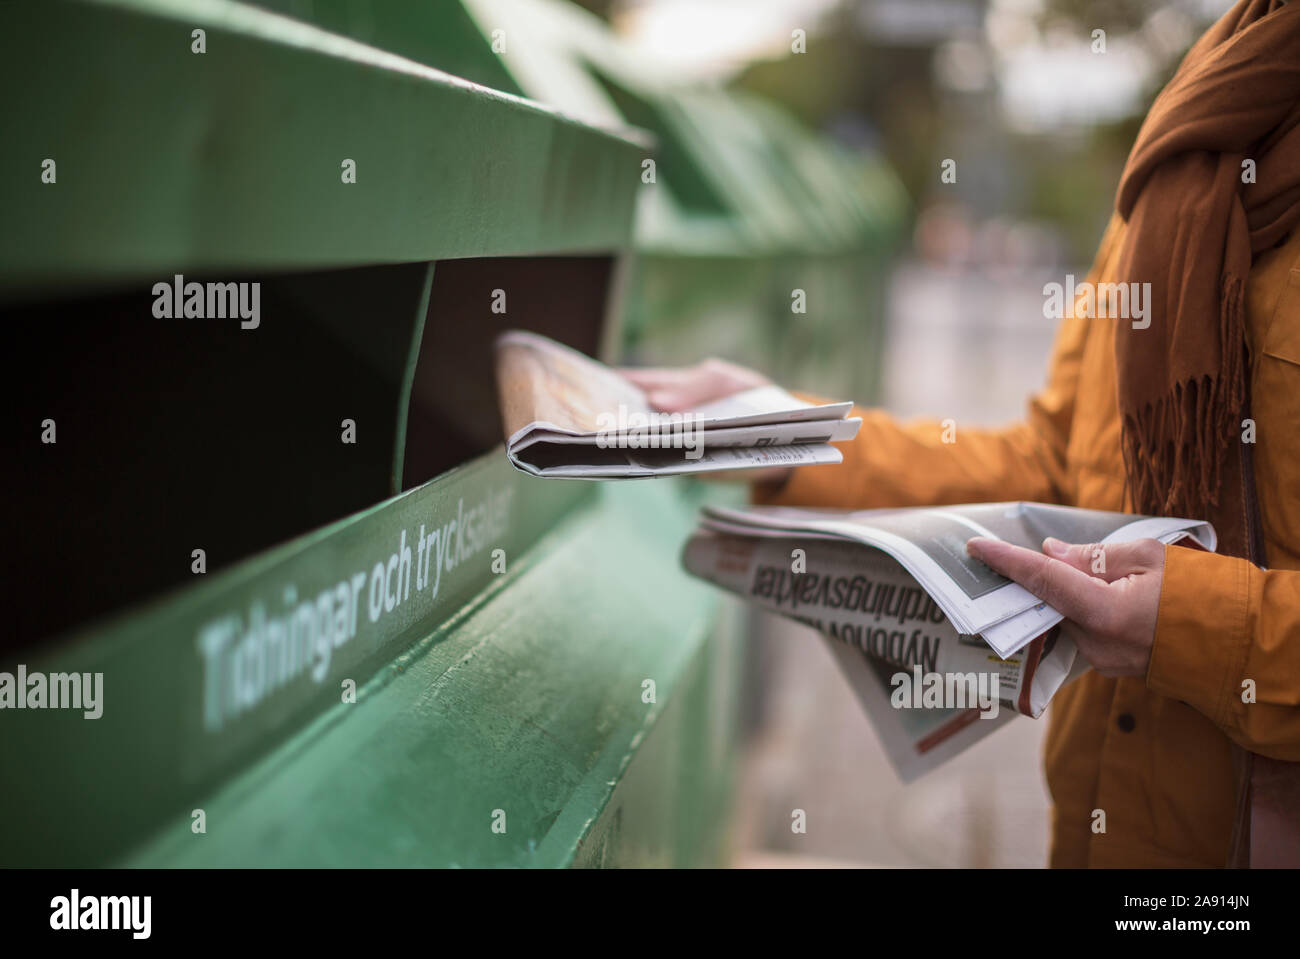 Hand putting newspaper into recycling bin Stock Photo